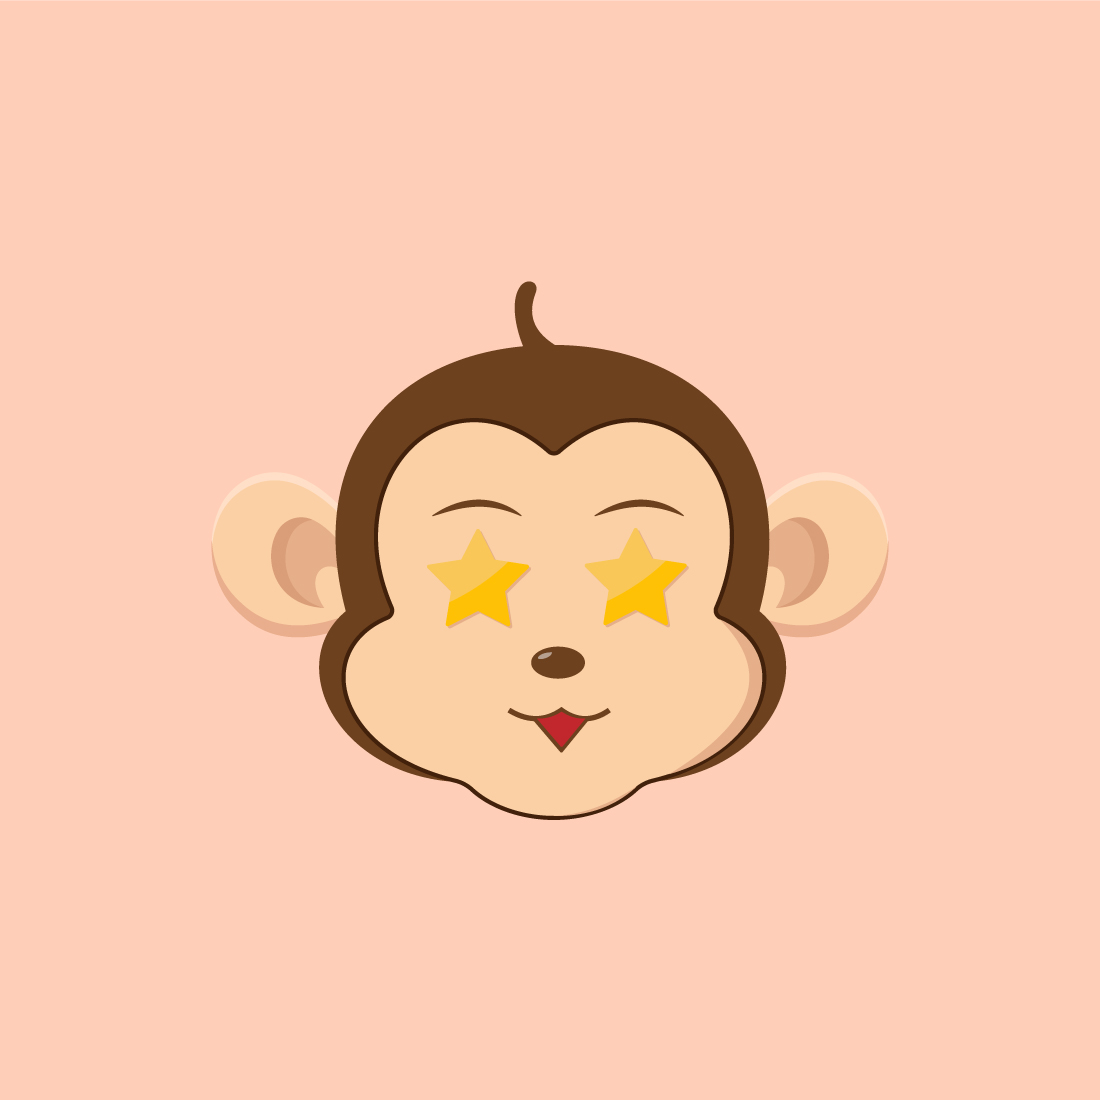 7 cute monkey faces 09